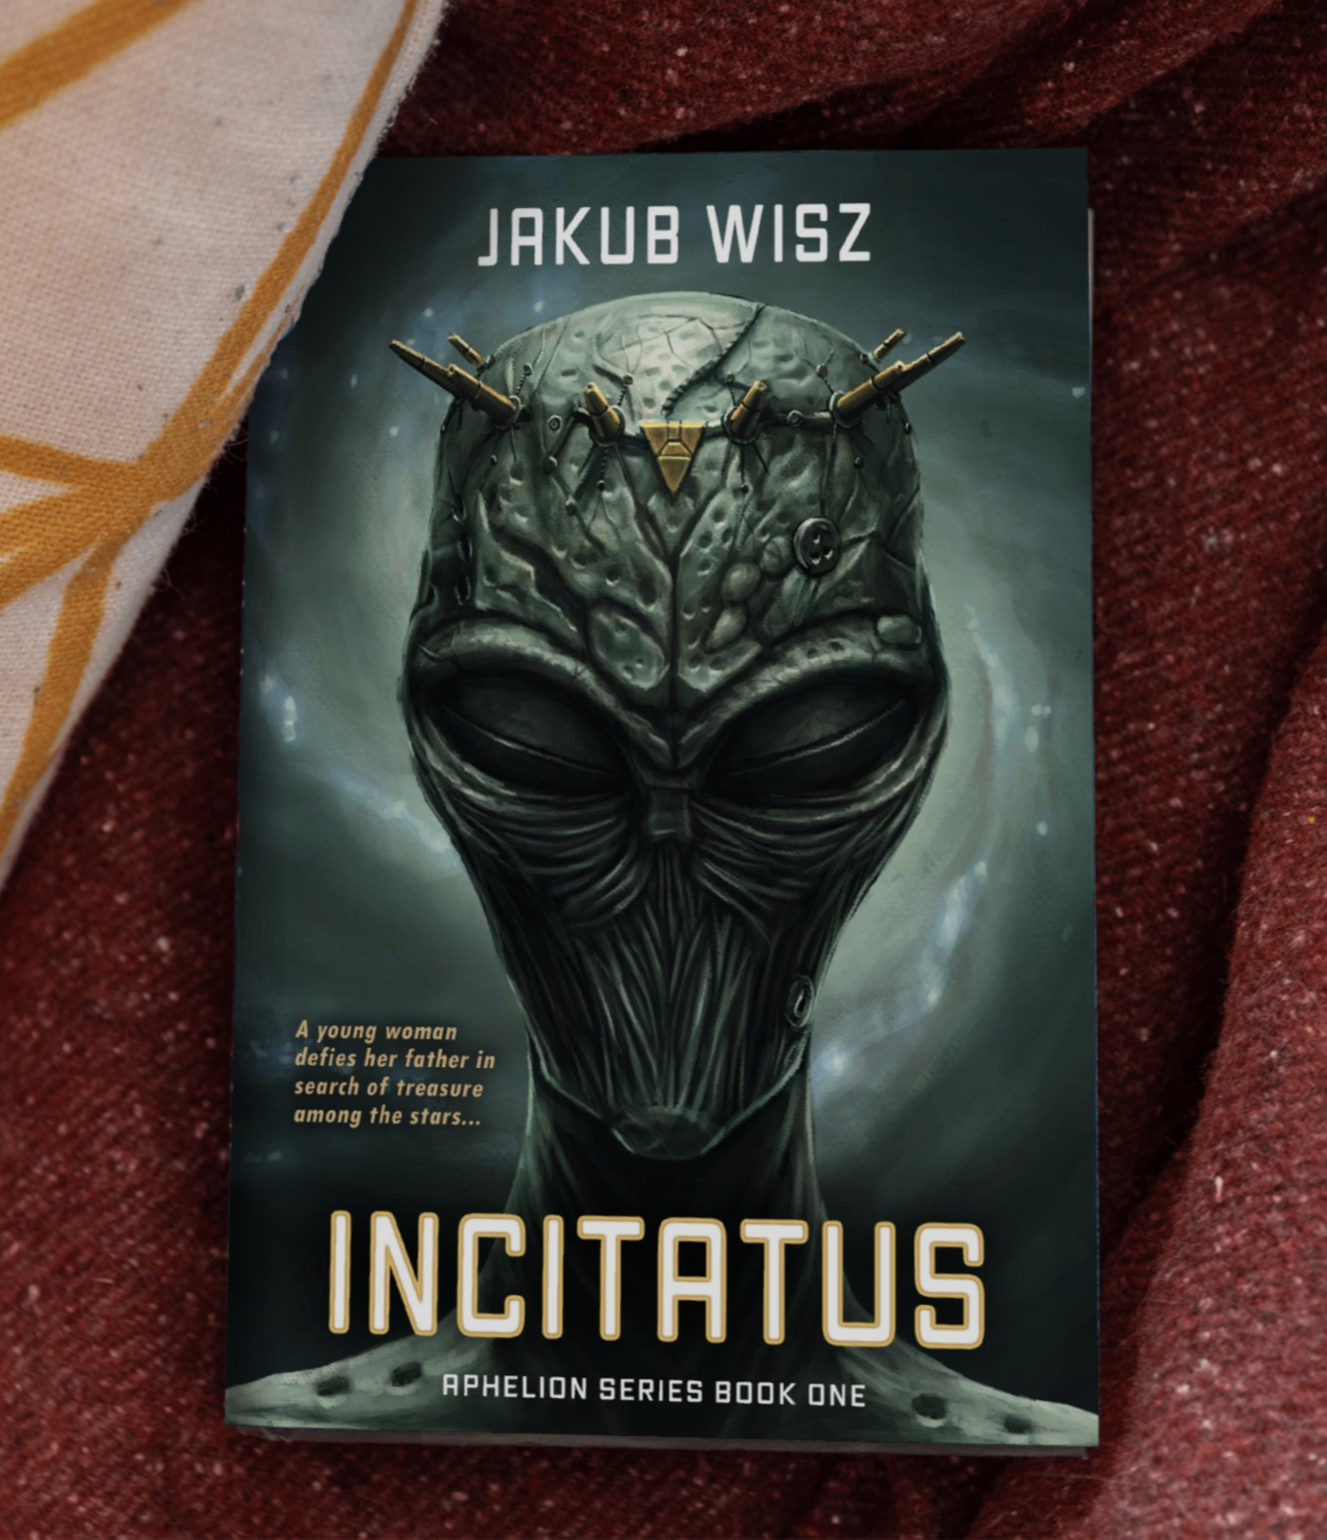 A cover of Incitatus by Jakub Wisz